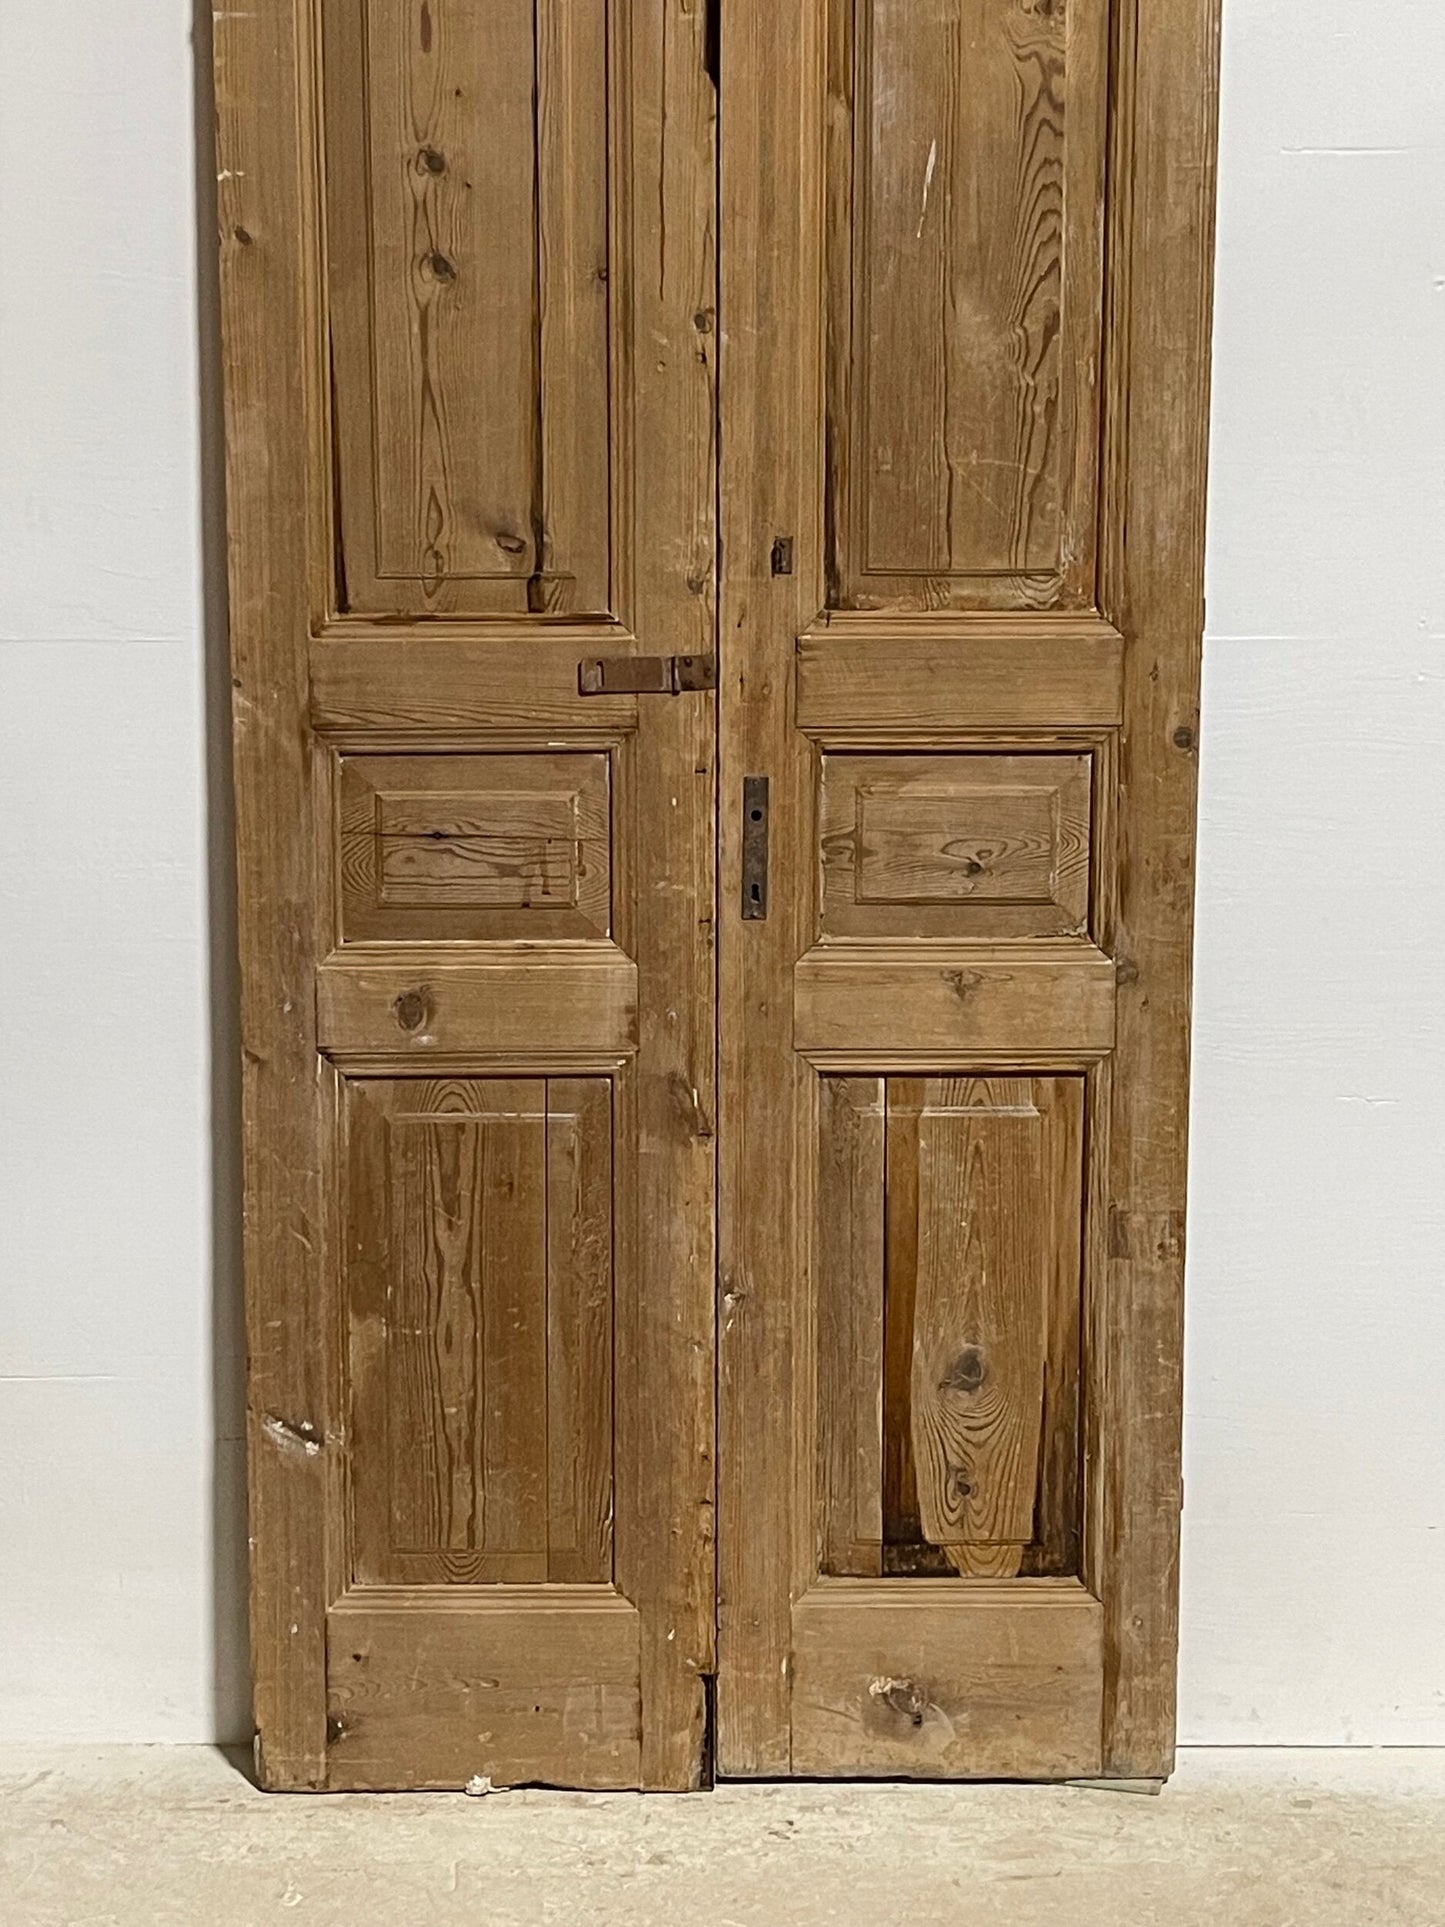 Antique French doors (92.5x39) H0198s